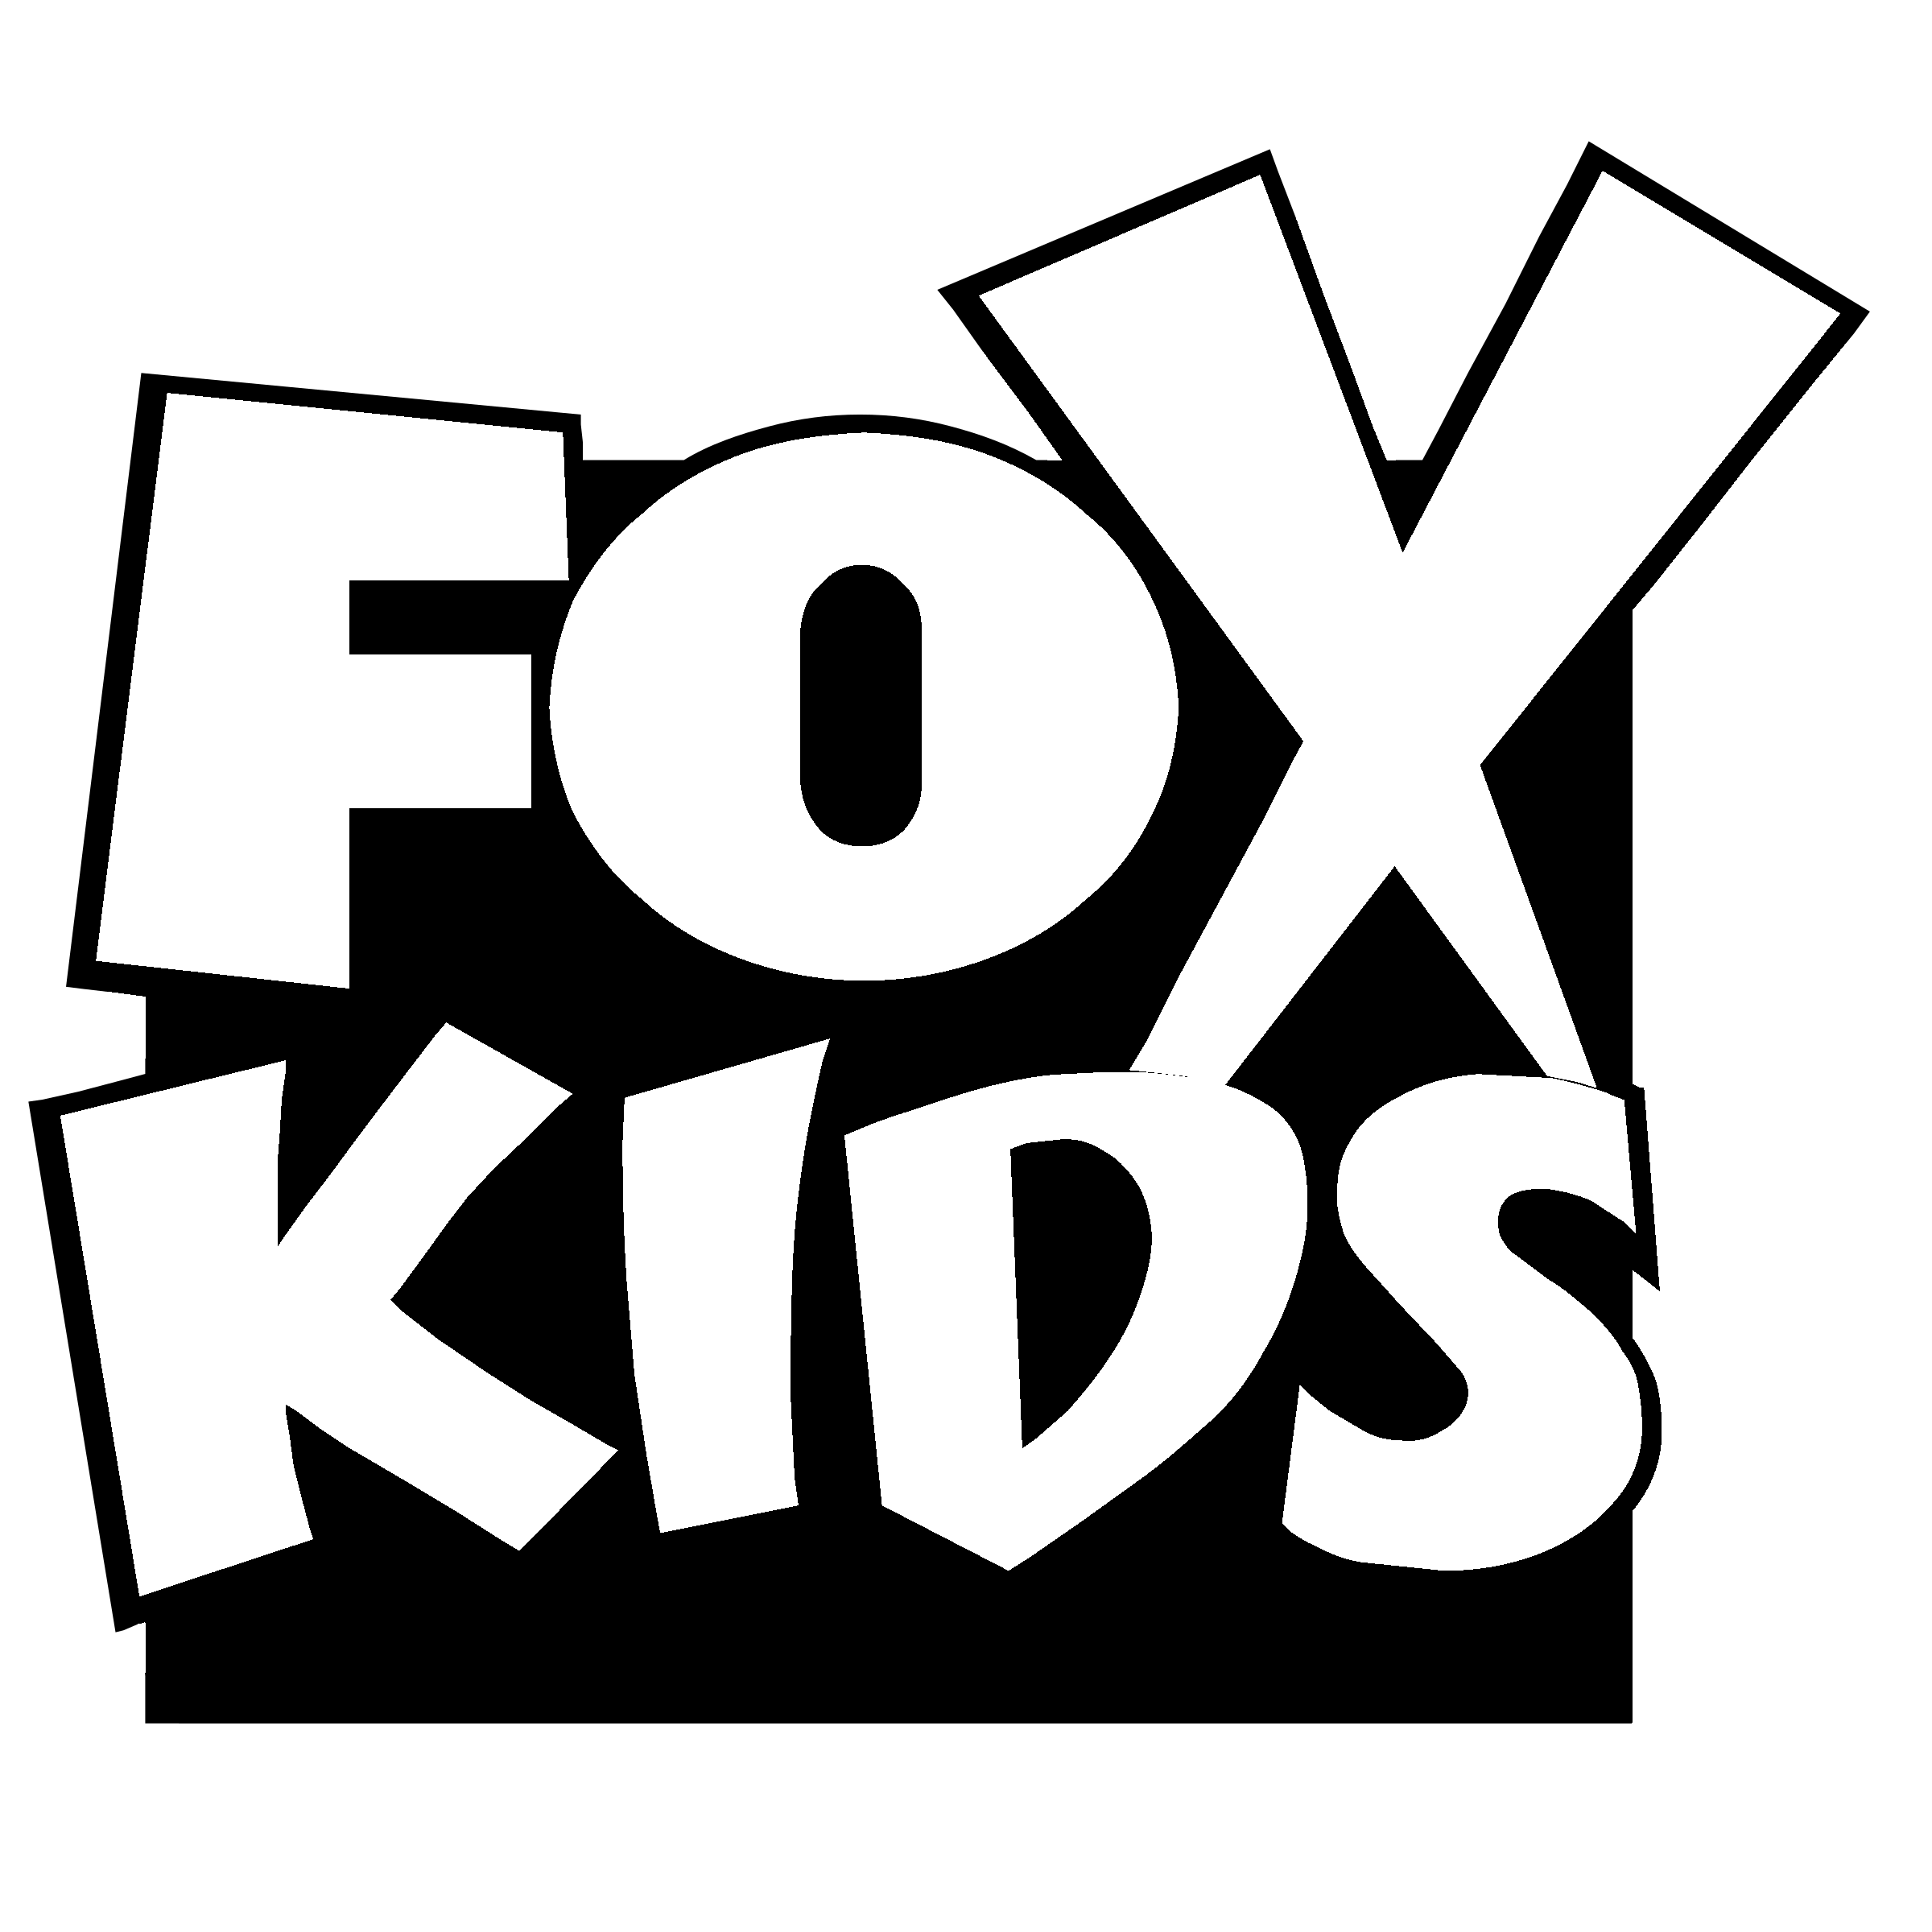 Fox Kids Logo - FoxKids Logo PNG Transparent & SVG ...